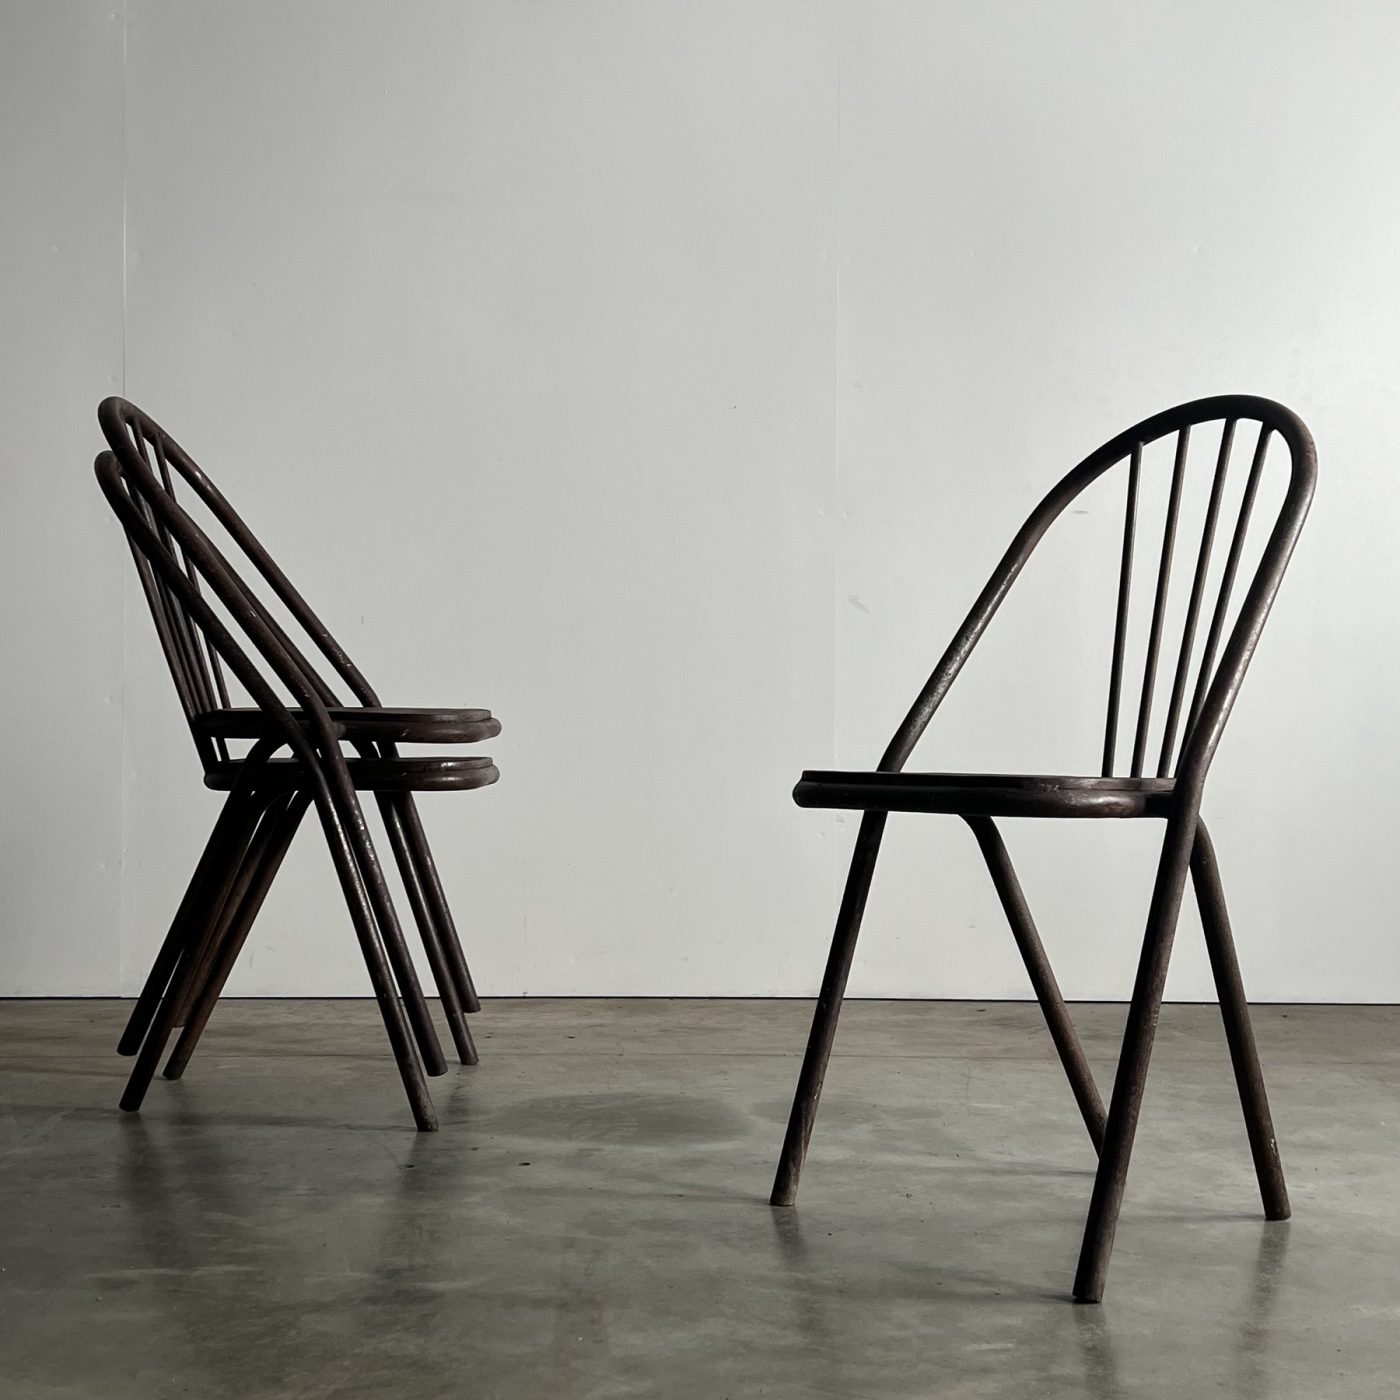 objet-vagabond-metal-chairs0002